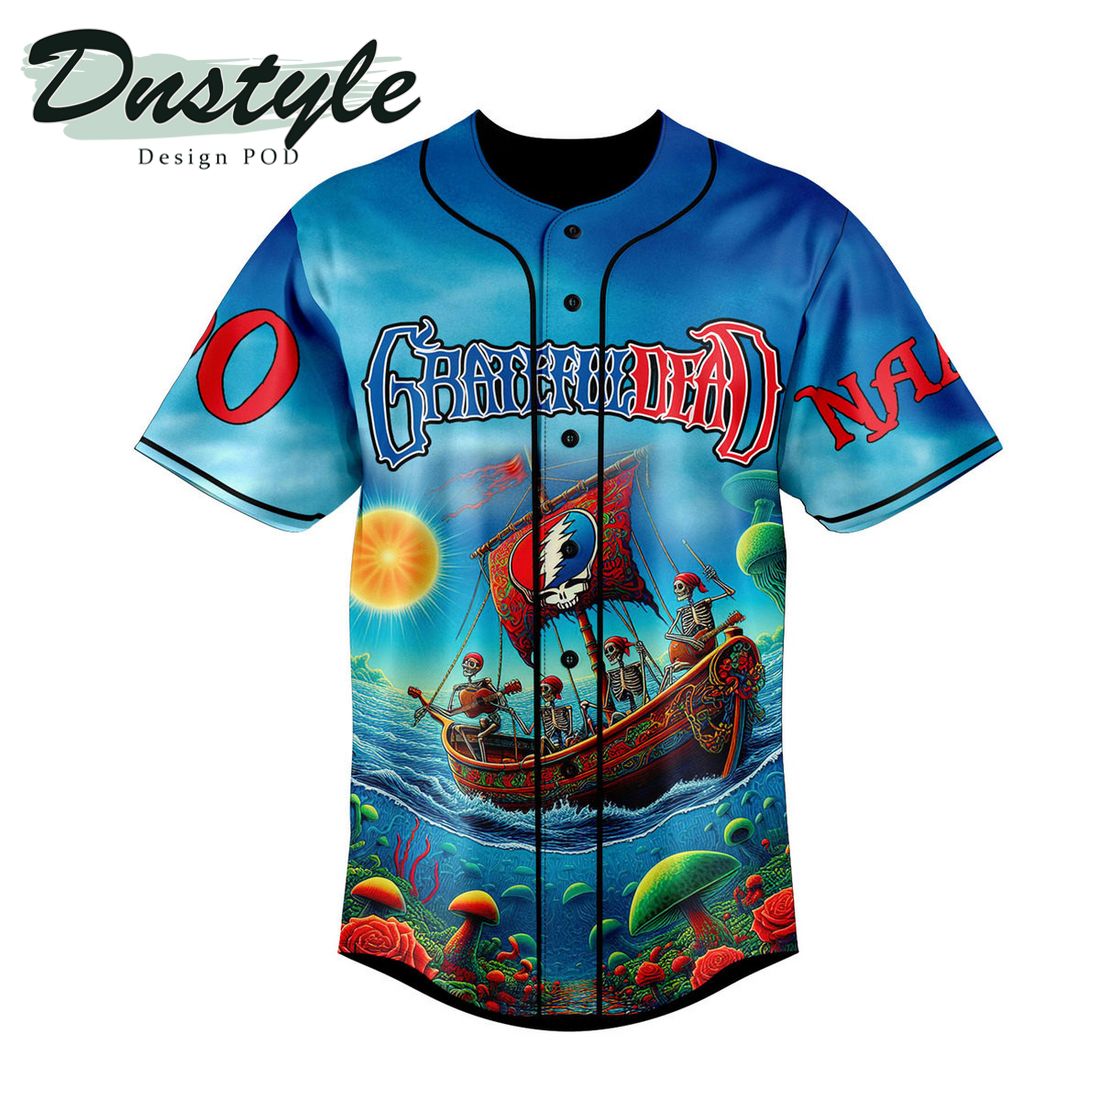 Grateful Dead ship of fools on a cruel sea personalized baseball jersey